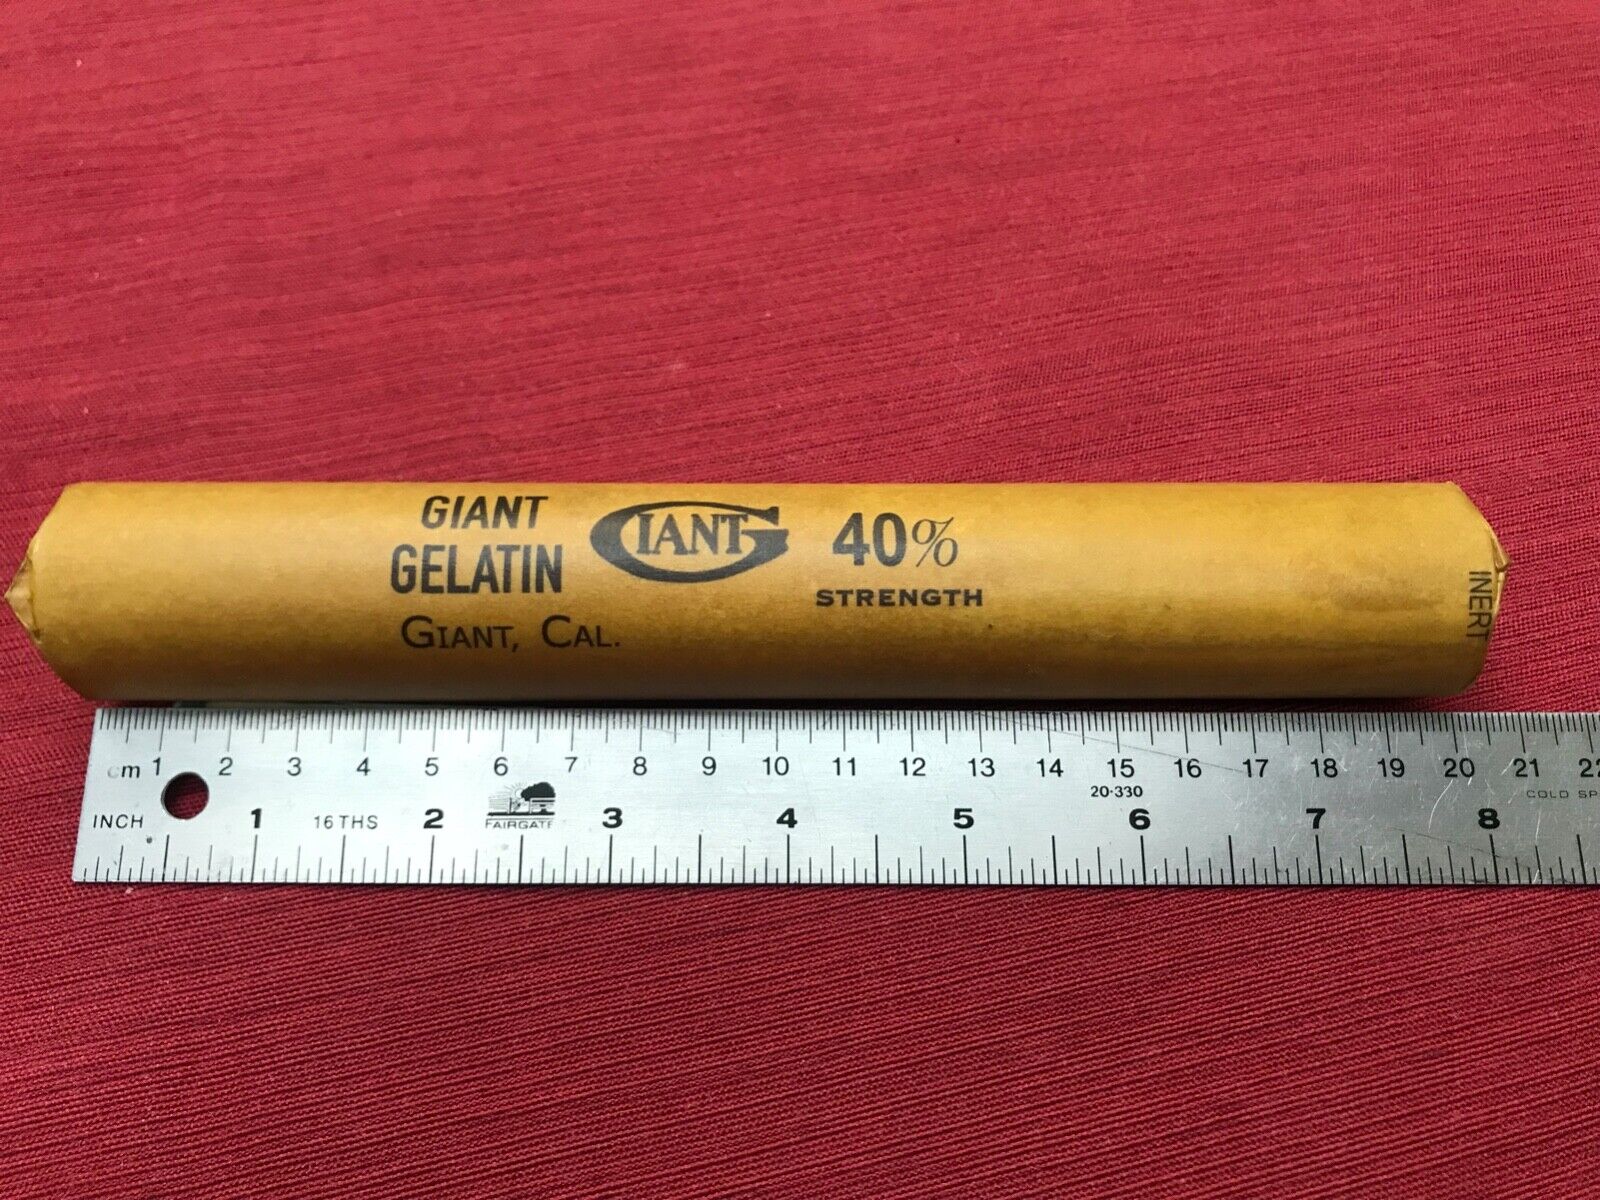 inert dynamite stick, very authentic looking Giant Gelatin